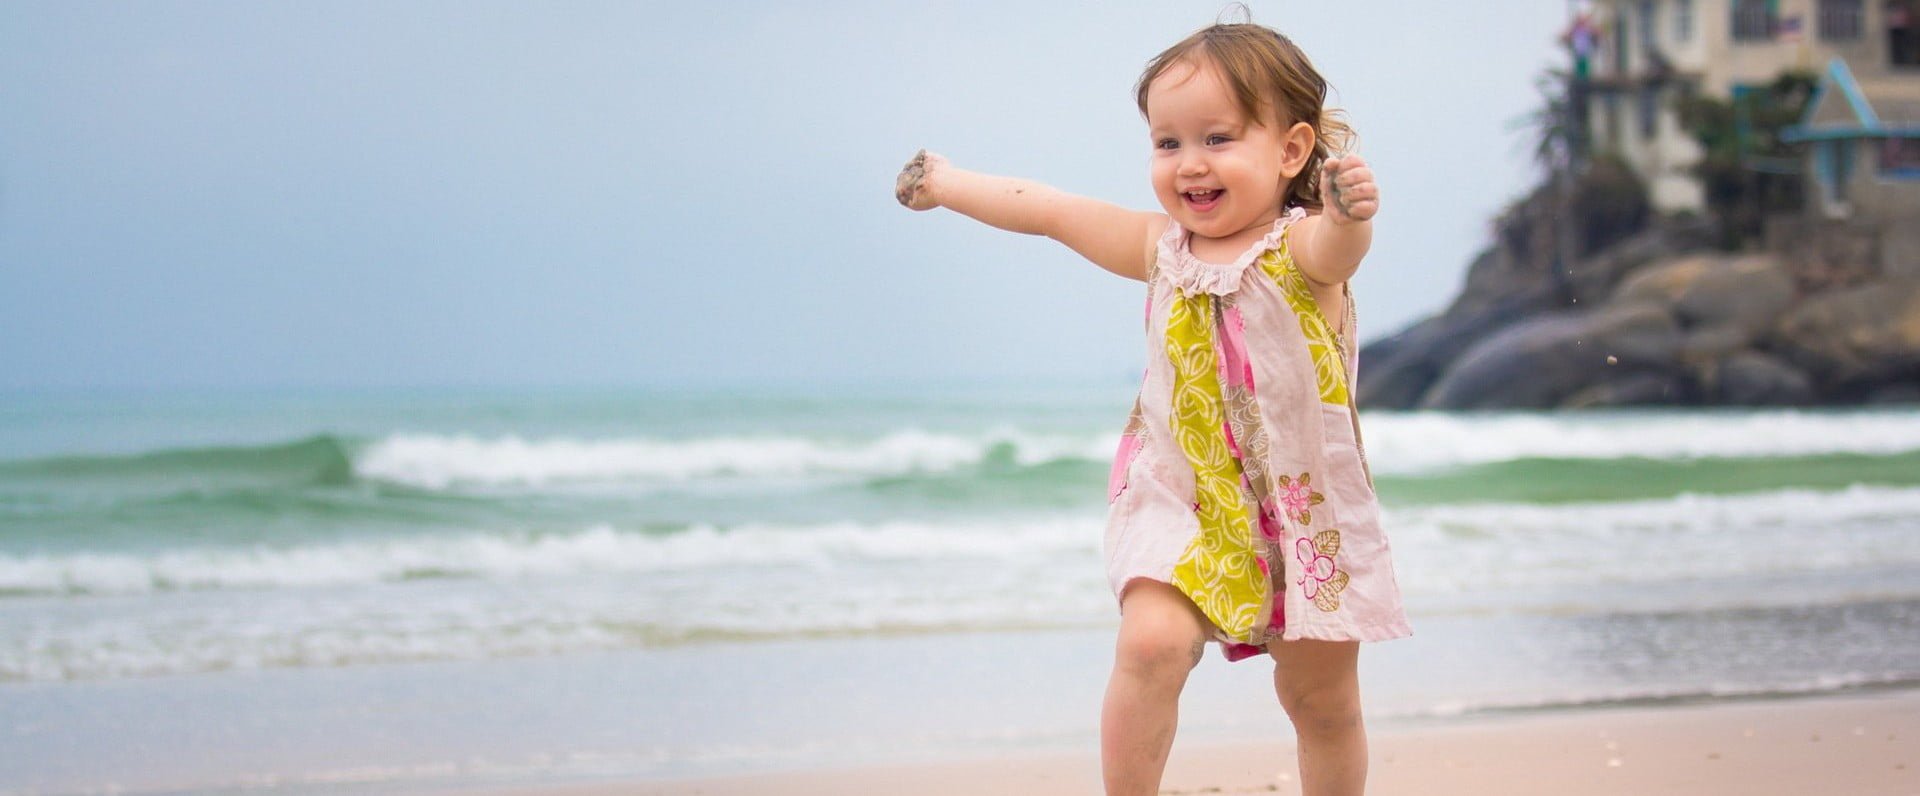 Happy Girl Running In Beach Wide E1425073075222 مجلة نقطة العلمية